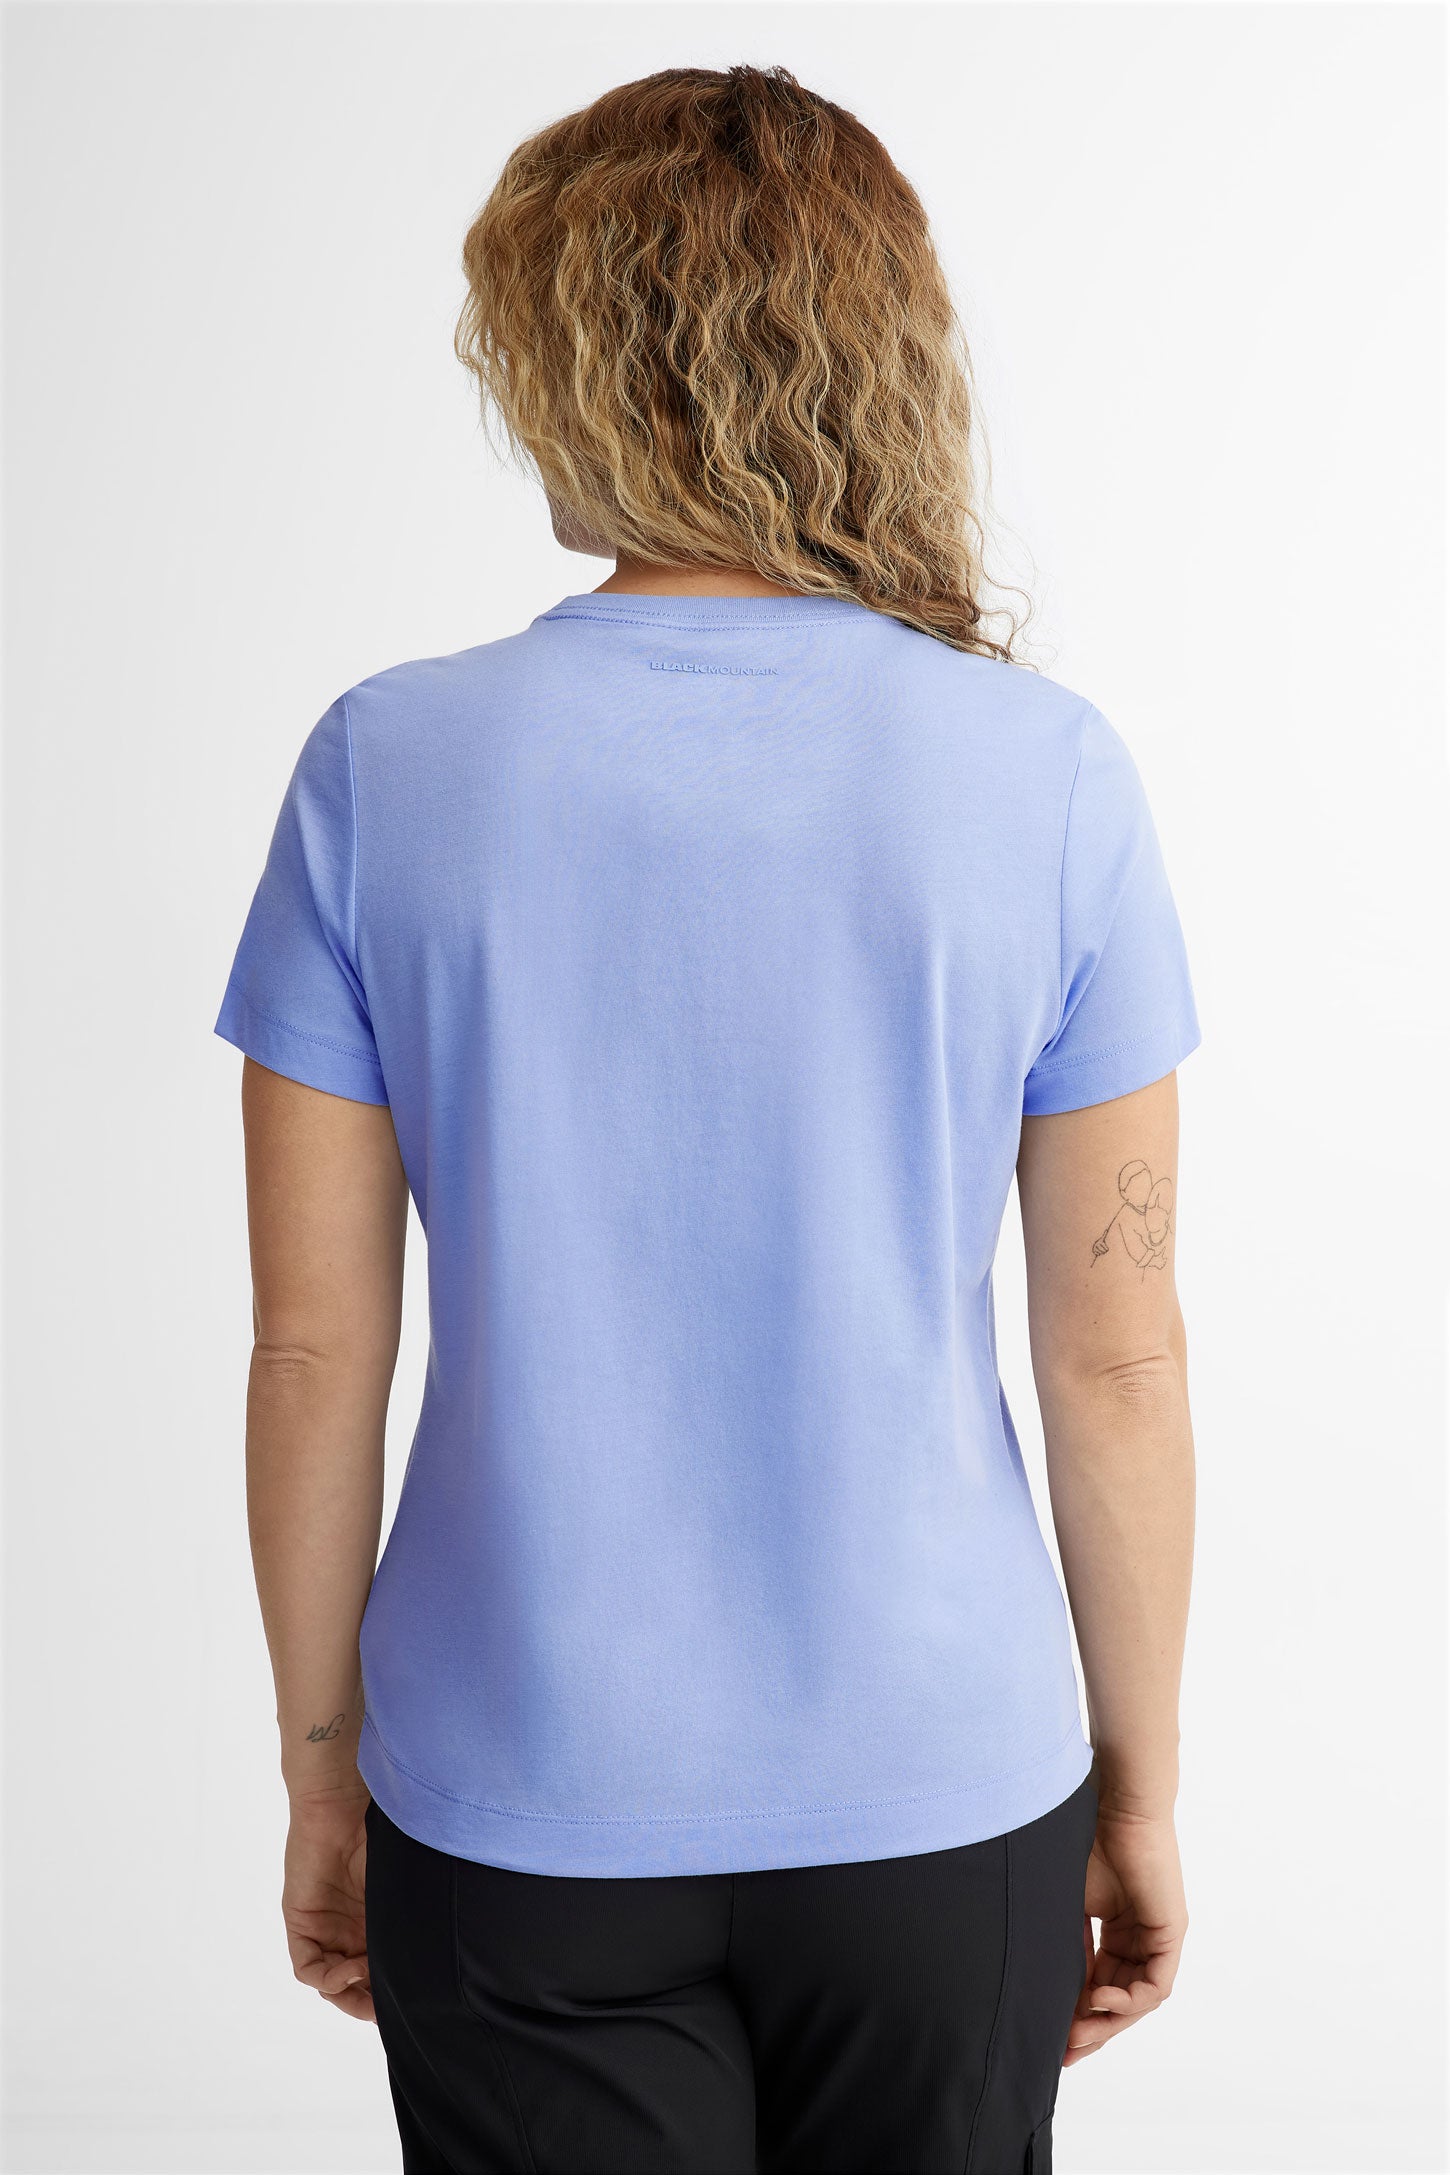 T-shirt col rond coton bio BM, 2/50$ - Femme && BLEU